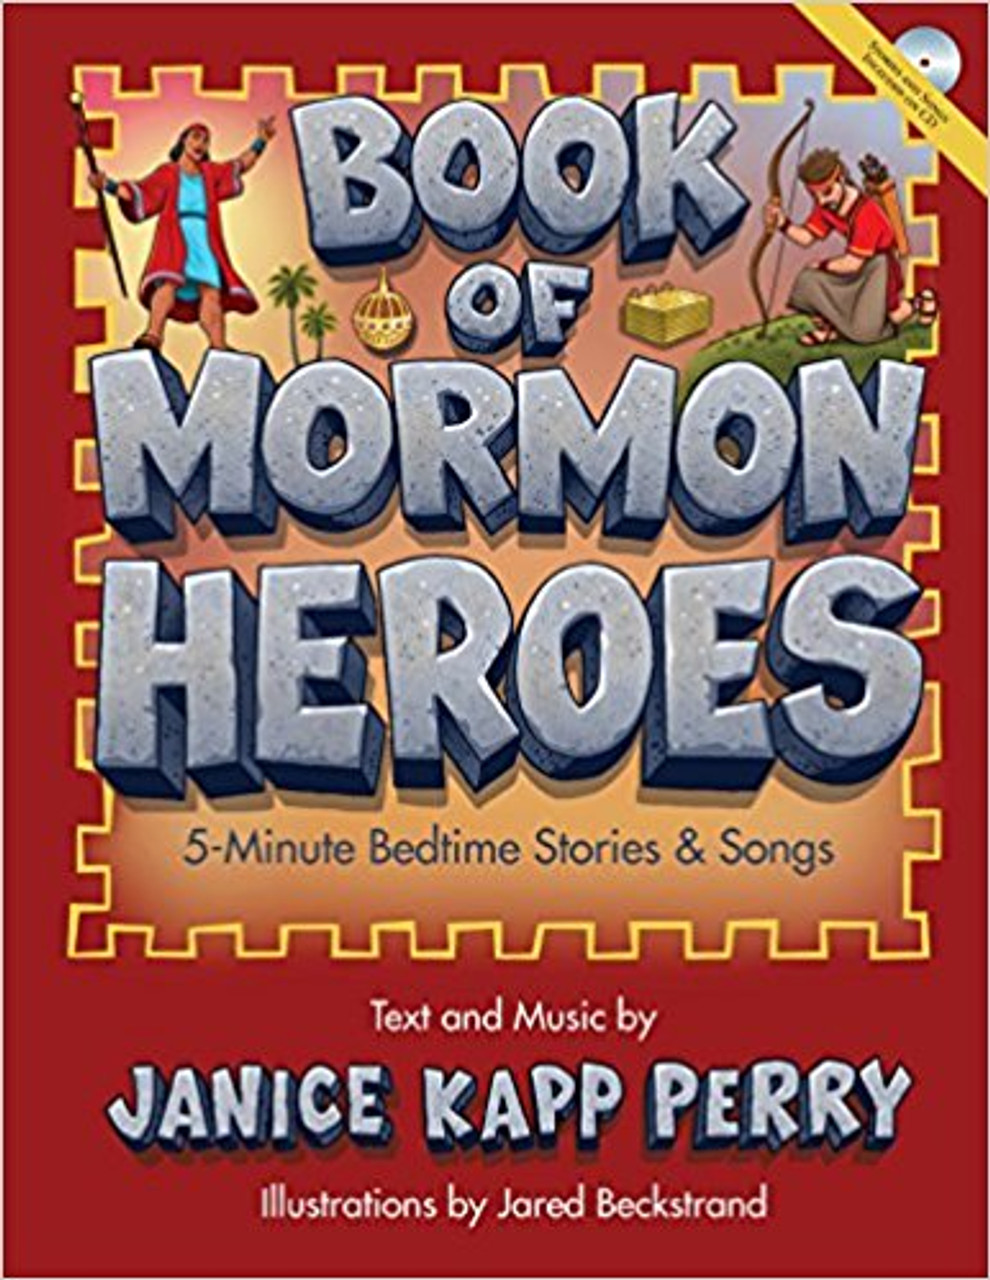 Book of Mormon Heroes: 5-Minute Bedtime Stories (Paperback) *